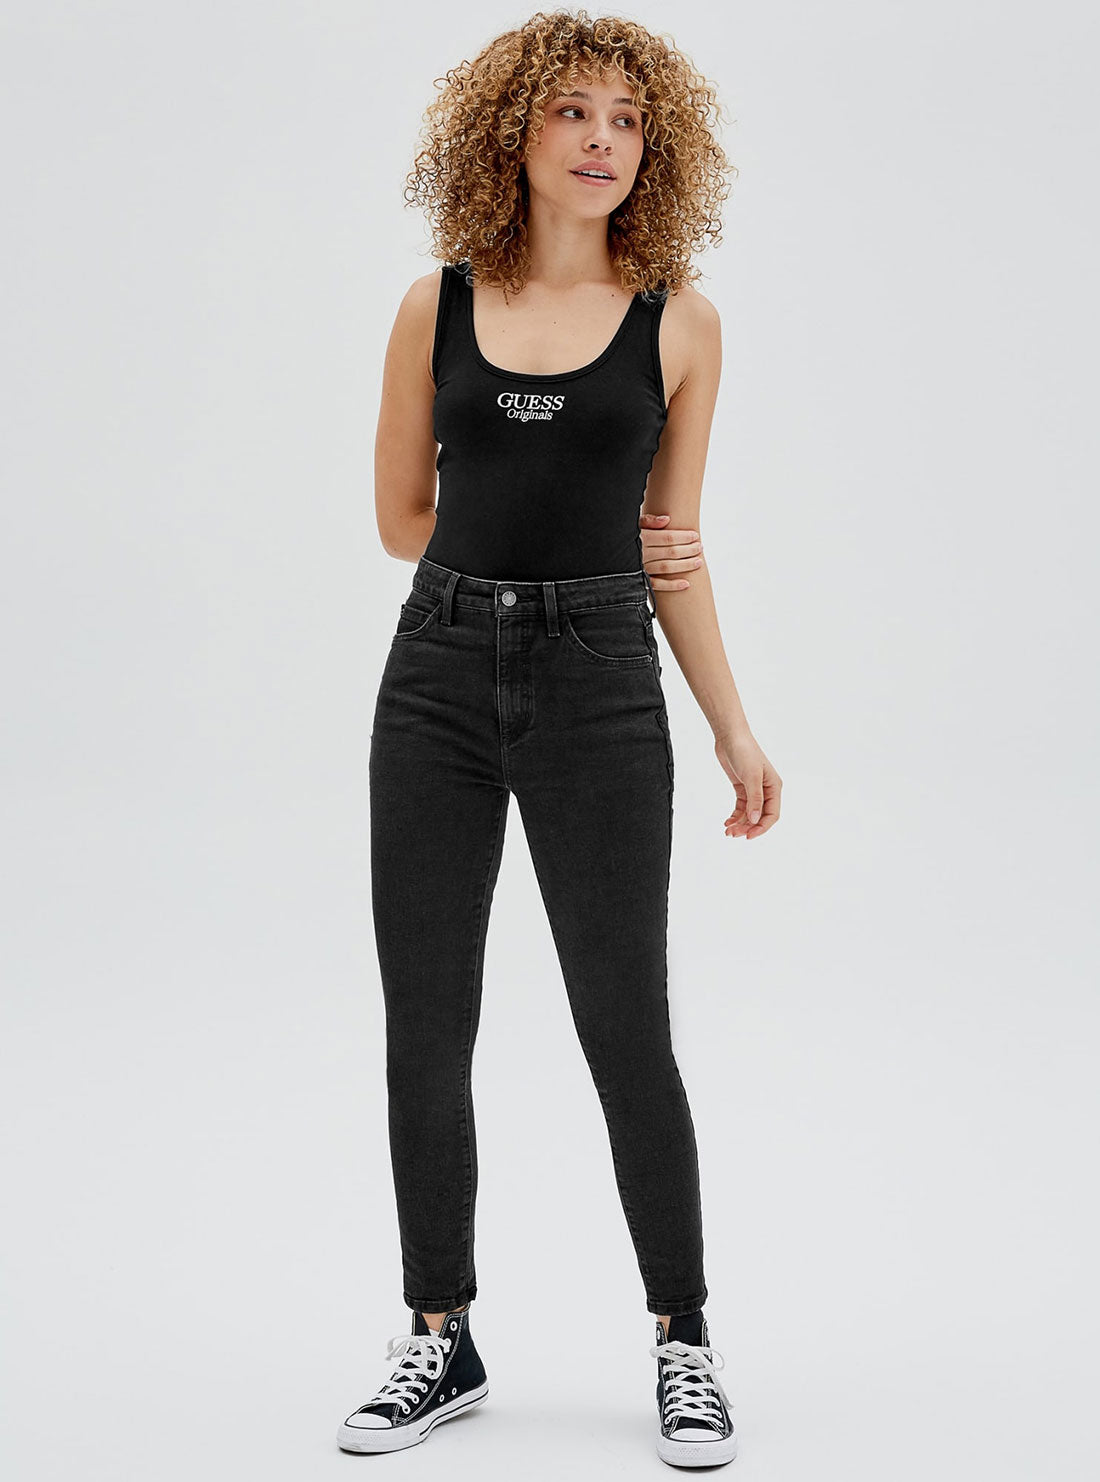 GUESS Womens Guess Originals Black Brea Bodysuit Top W2GP41K1D80 Full View